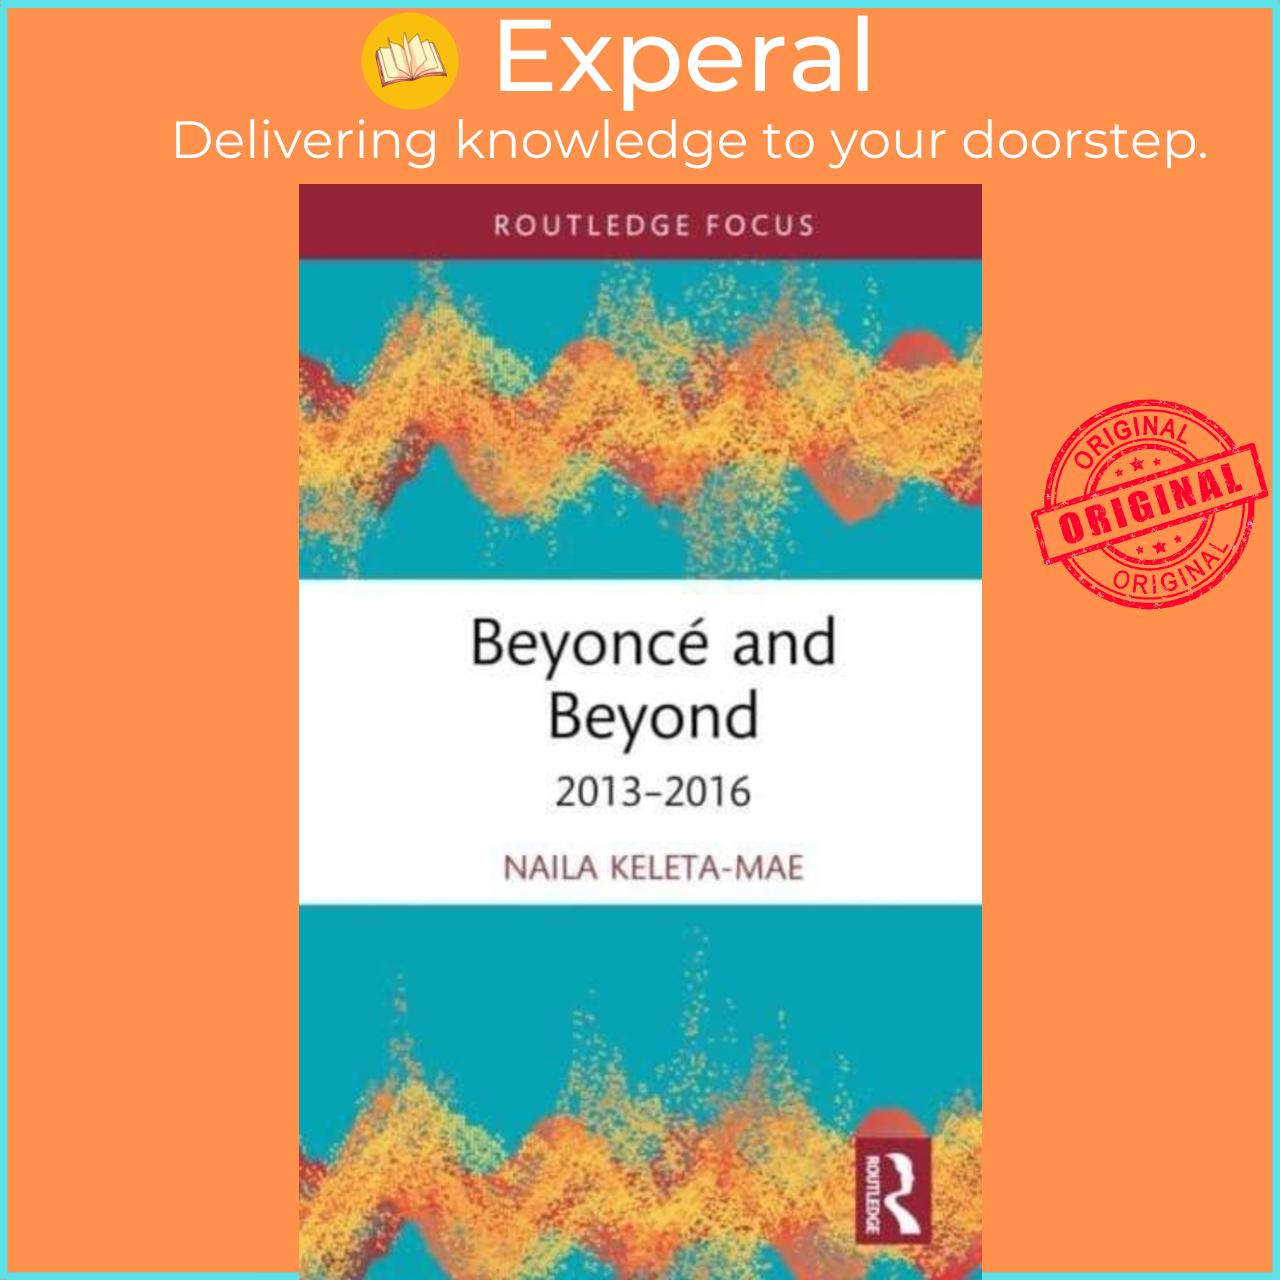 Sách - Beyonce and Beyond - 2013-2016 by Naila Keleta-Mae (UK edition, hardcover)